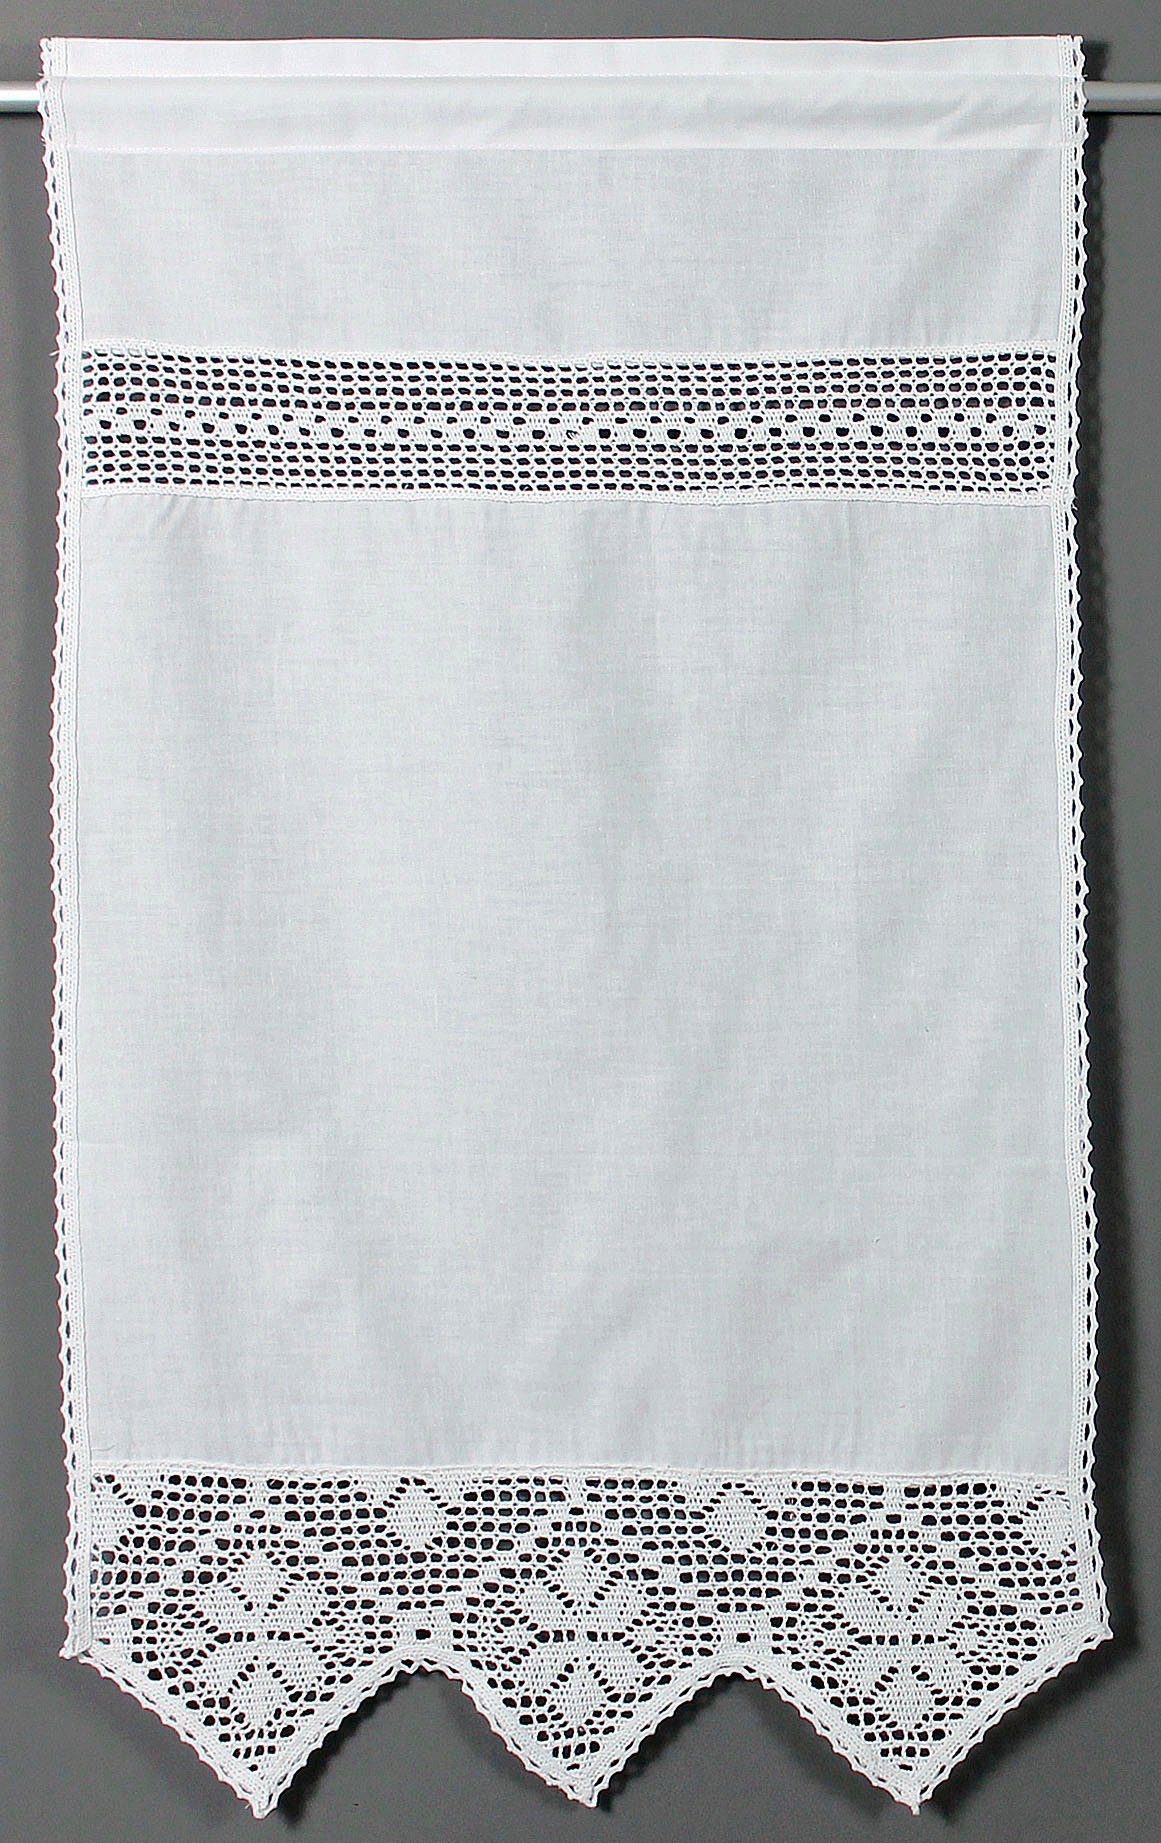 maschinell OF - Bärental, Scheibengardine gefertigte HOME DECO, St), Häkelspitze ART halbtransparent, HOSSNER (1 Stangendurchzug